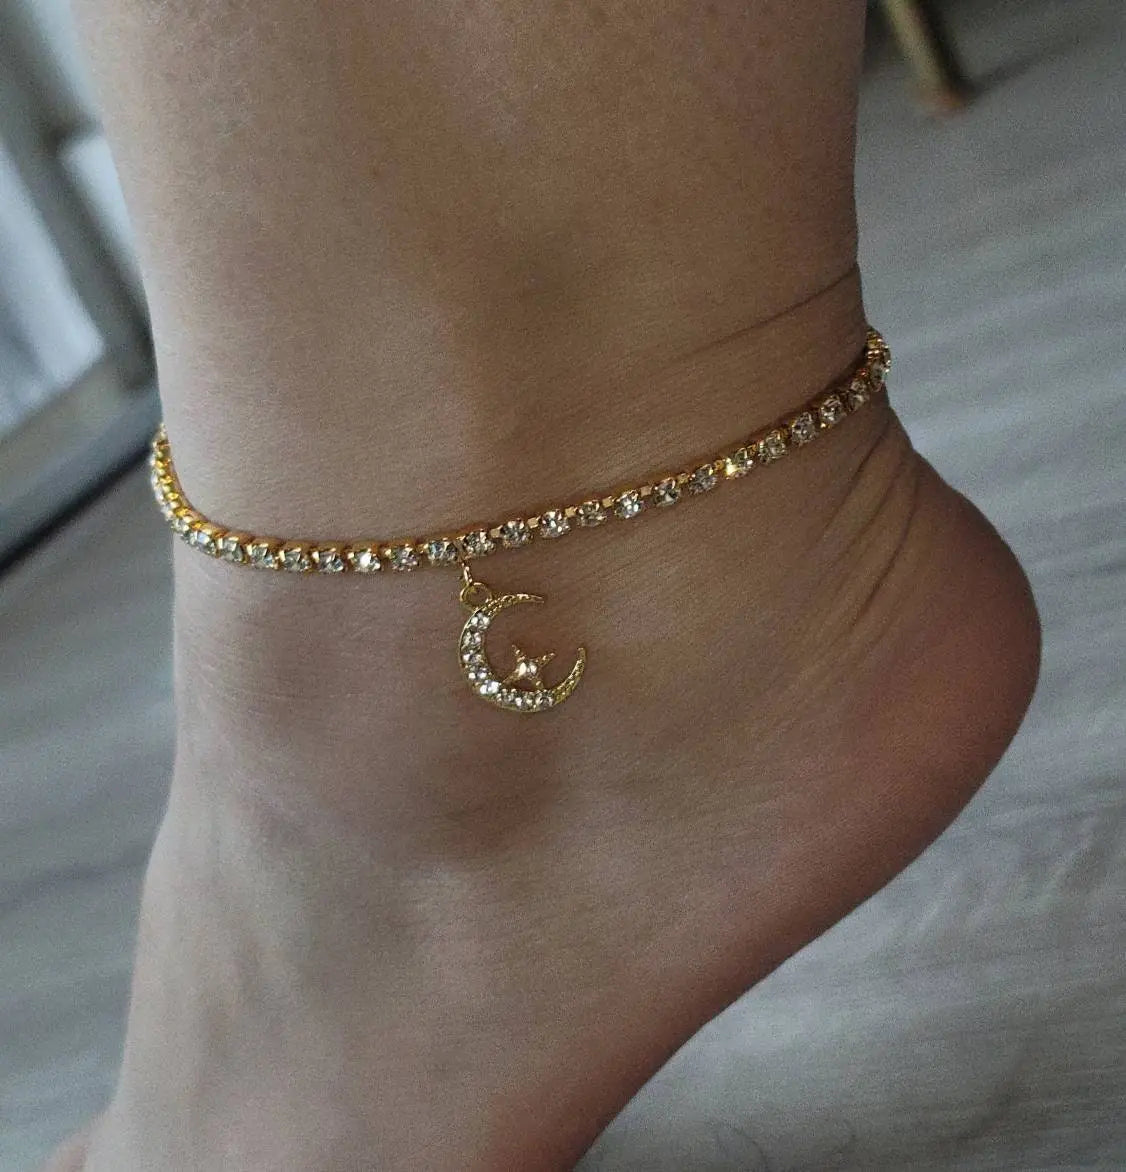 Rhinestone Islam Stars Moon Anklet Foot Jewelry for Women Beach Barefoot Chain Bracelet On the Leg Accessories Gift JettsJewelers